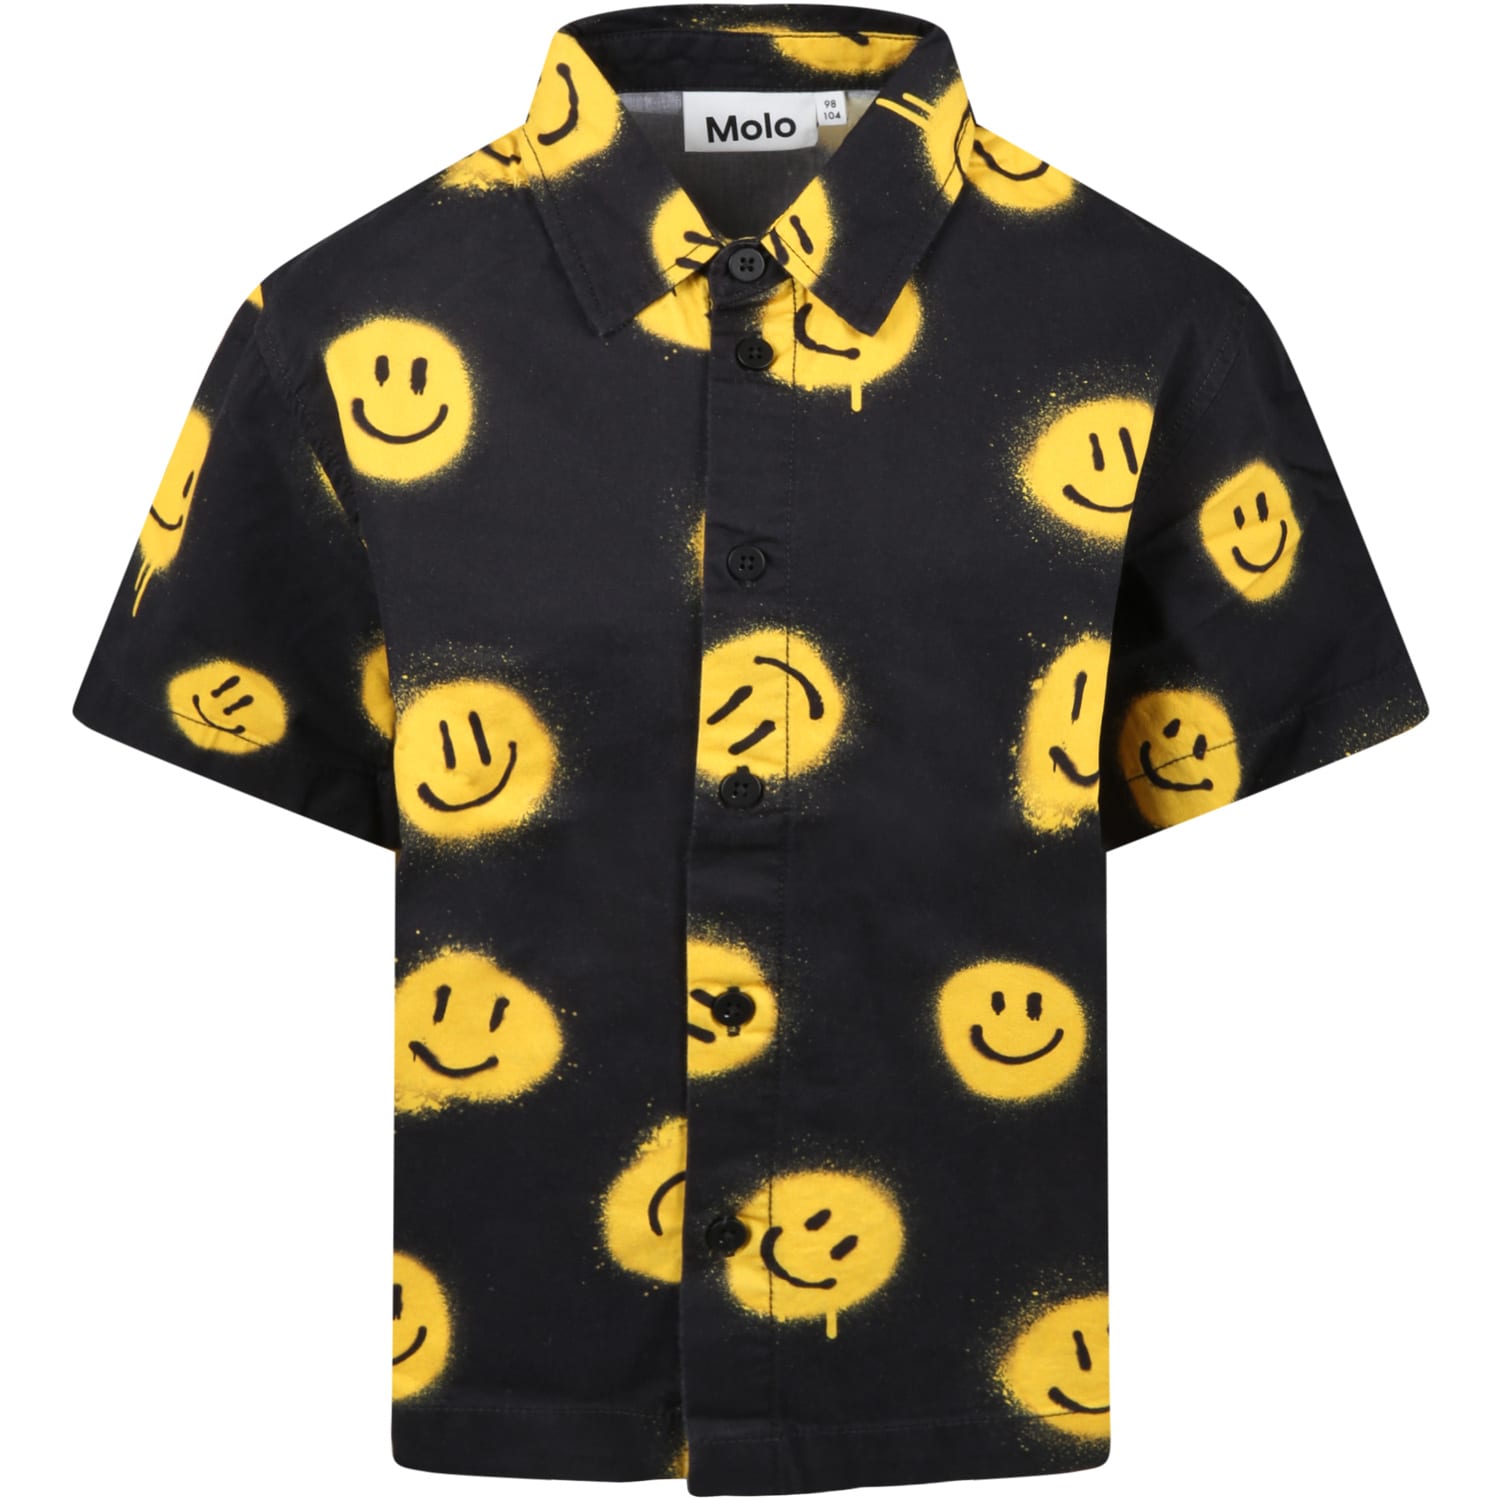 Molo Black Shirt For Boy With Smileys